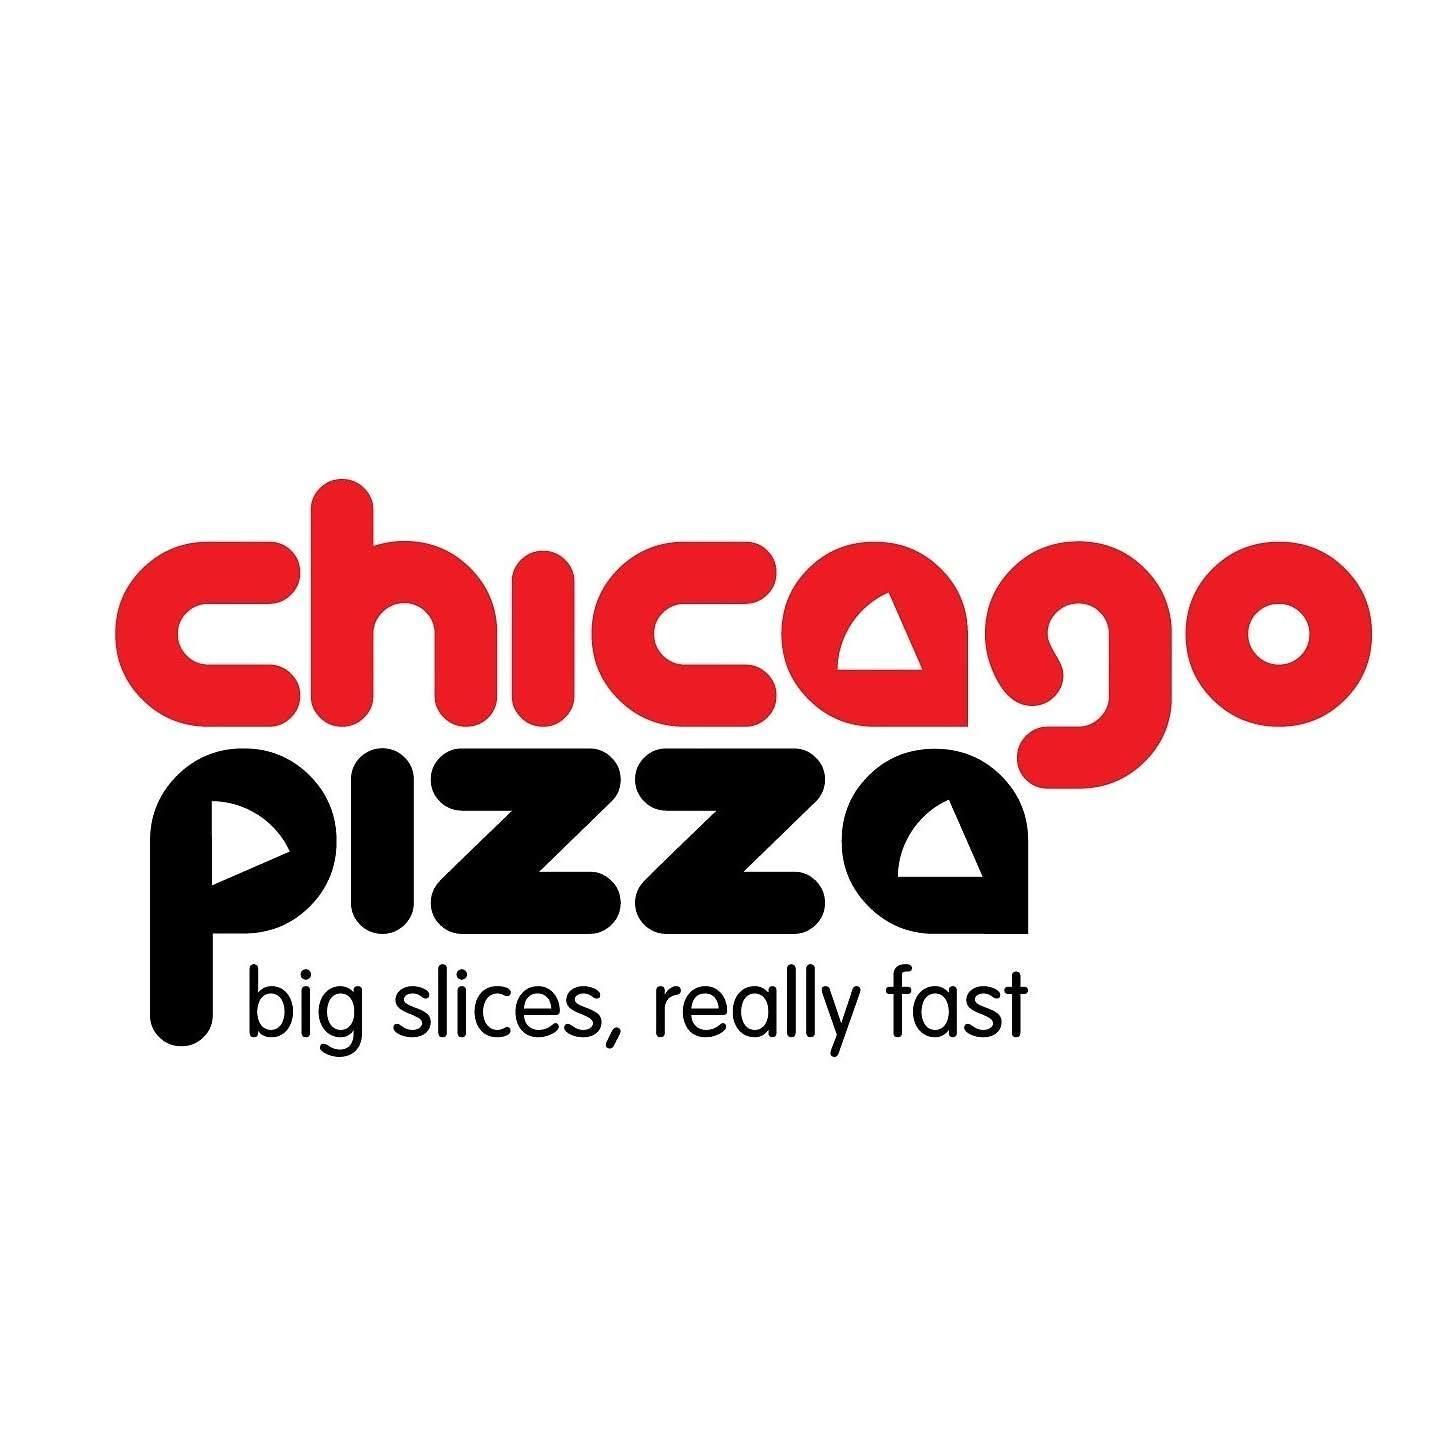 Chicago Pizza - Margao